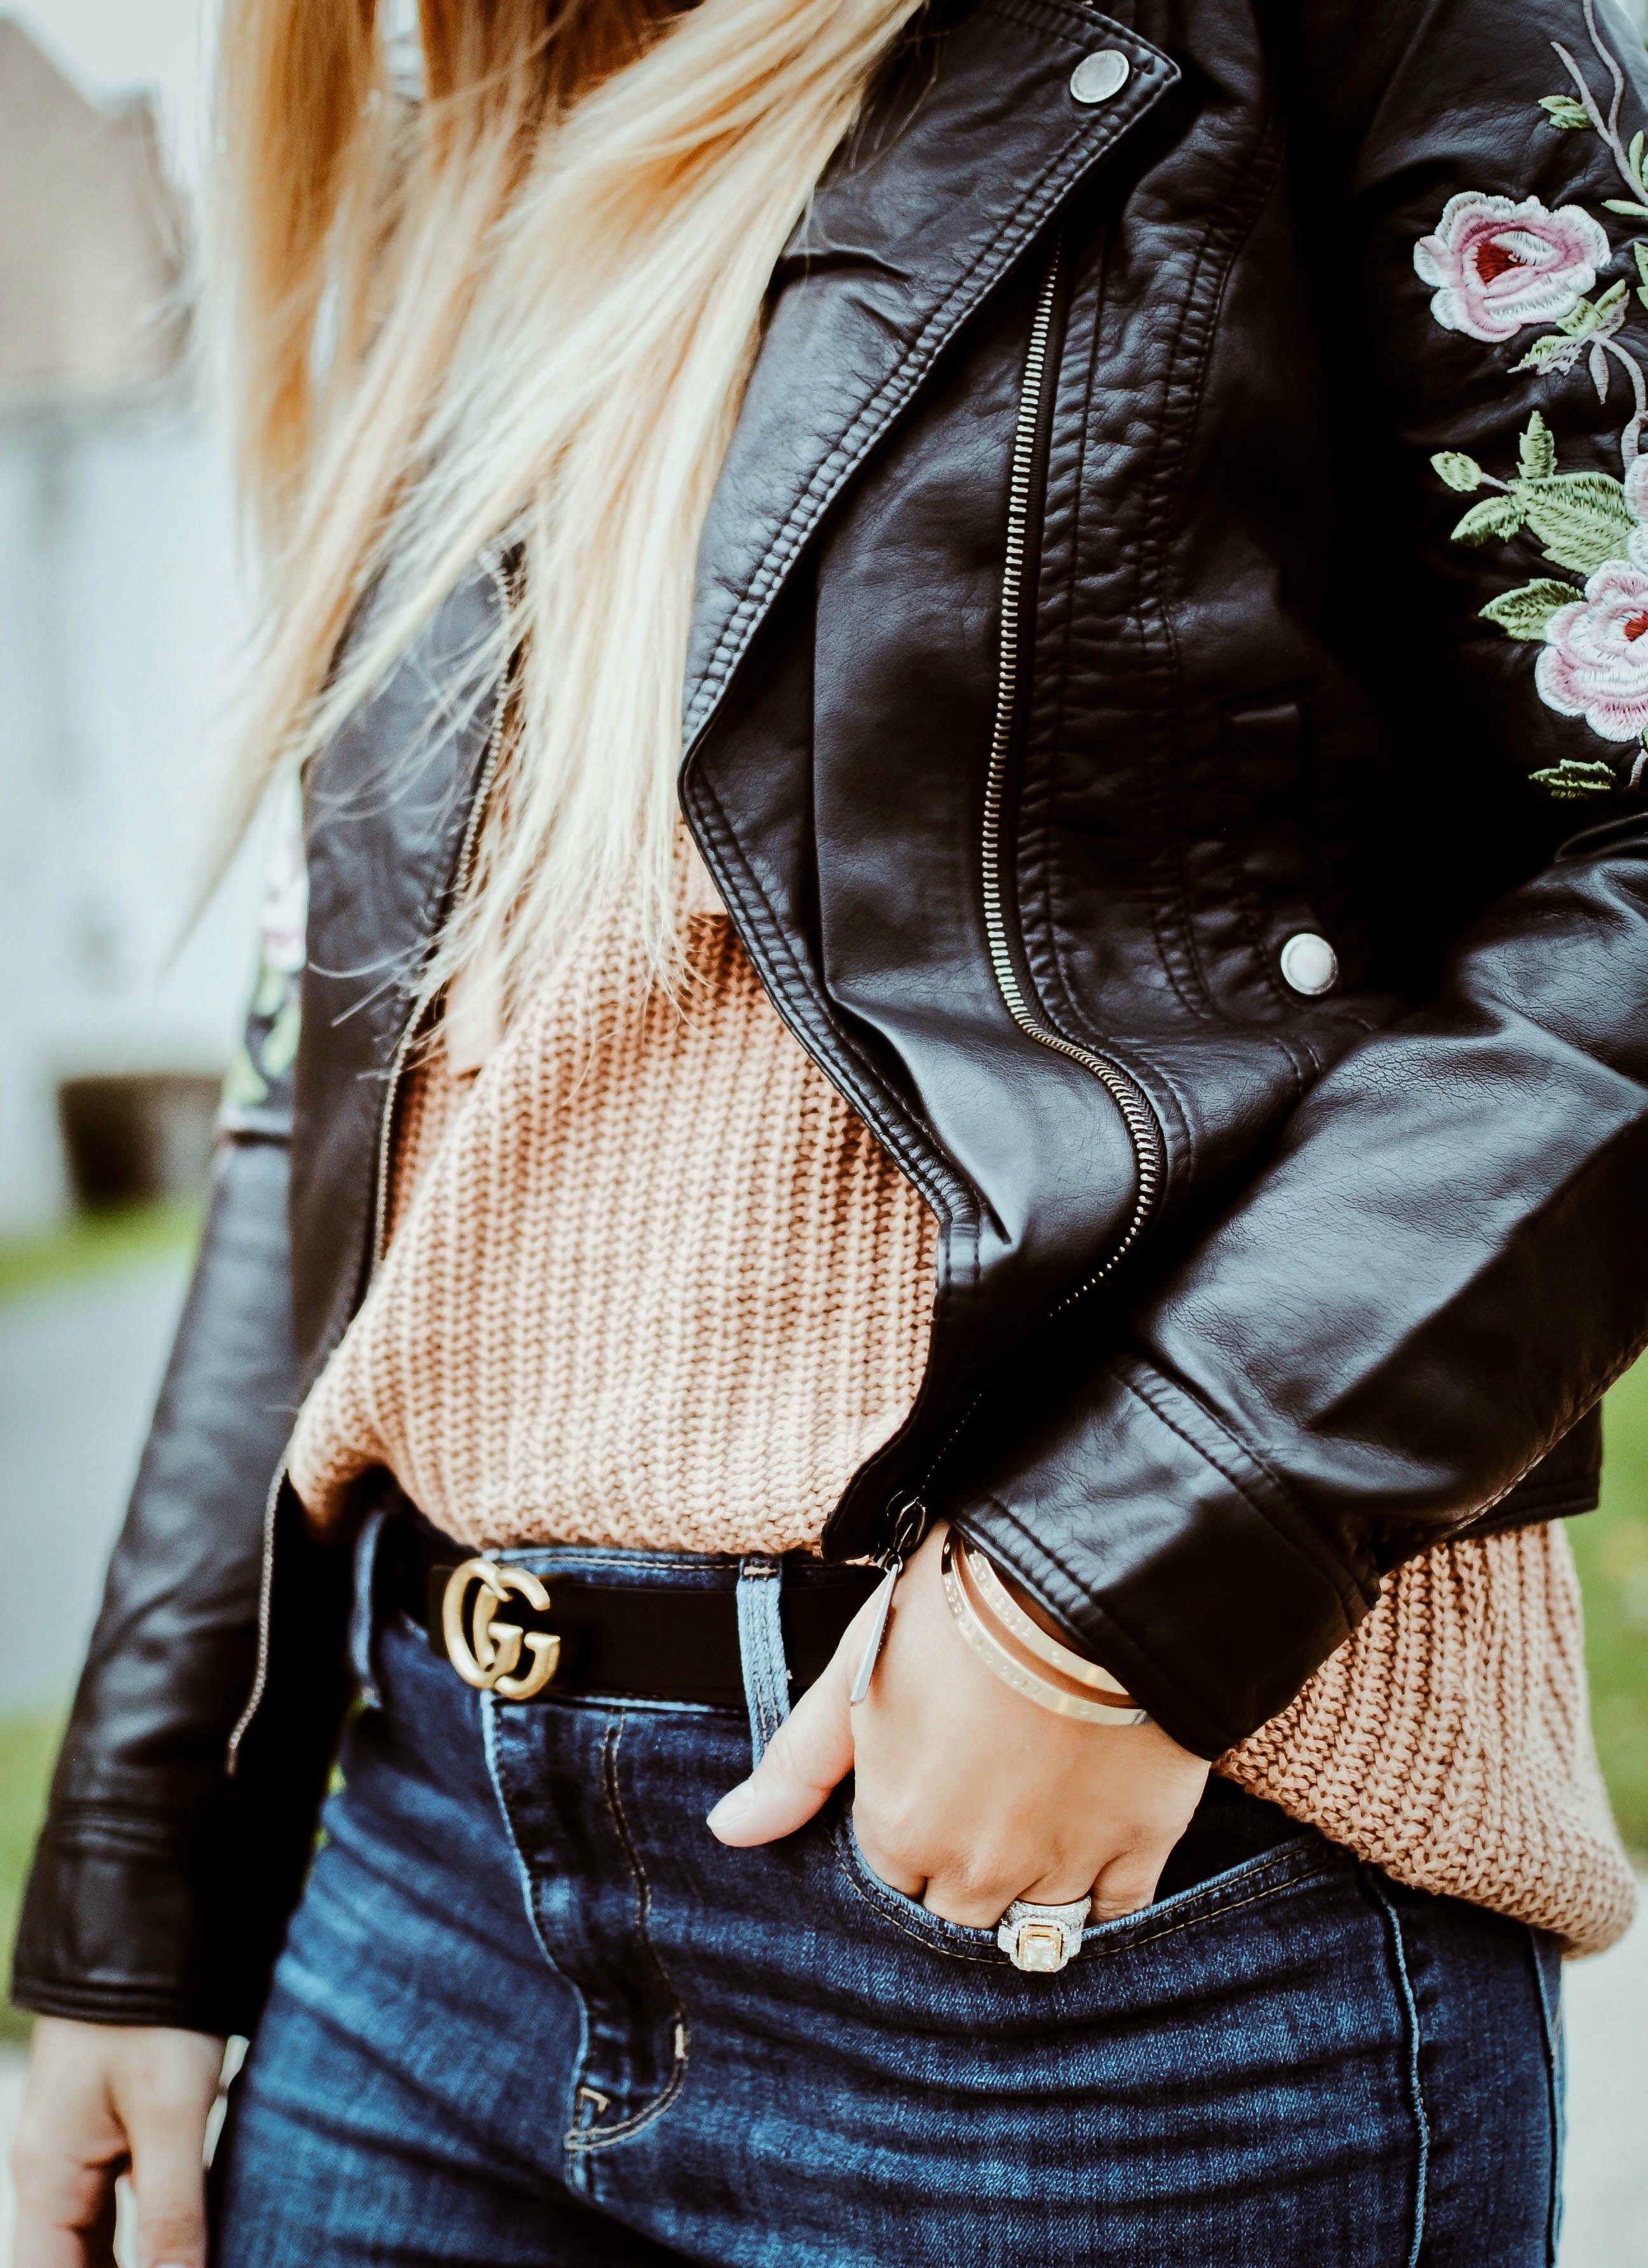 Gucci-belt-levis-jeans-moto-jacket-what-would-v-wear